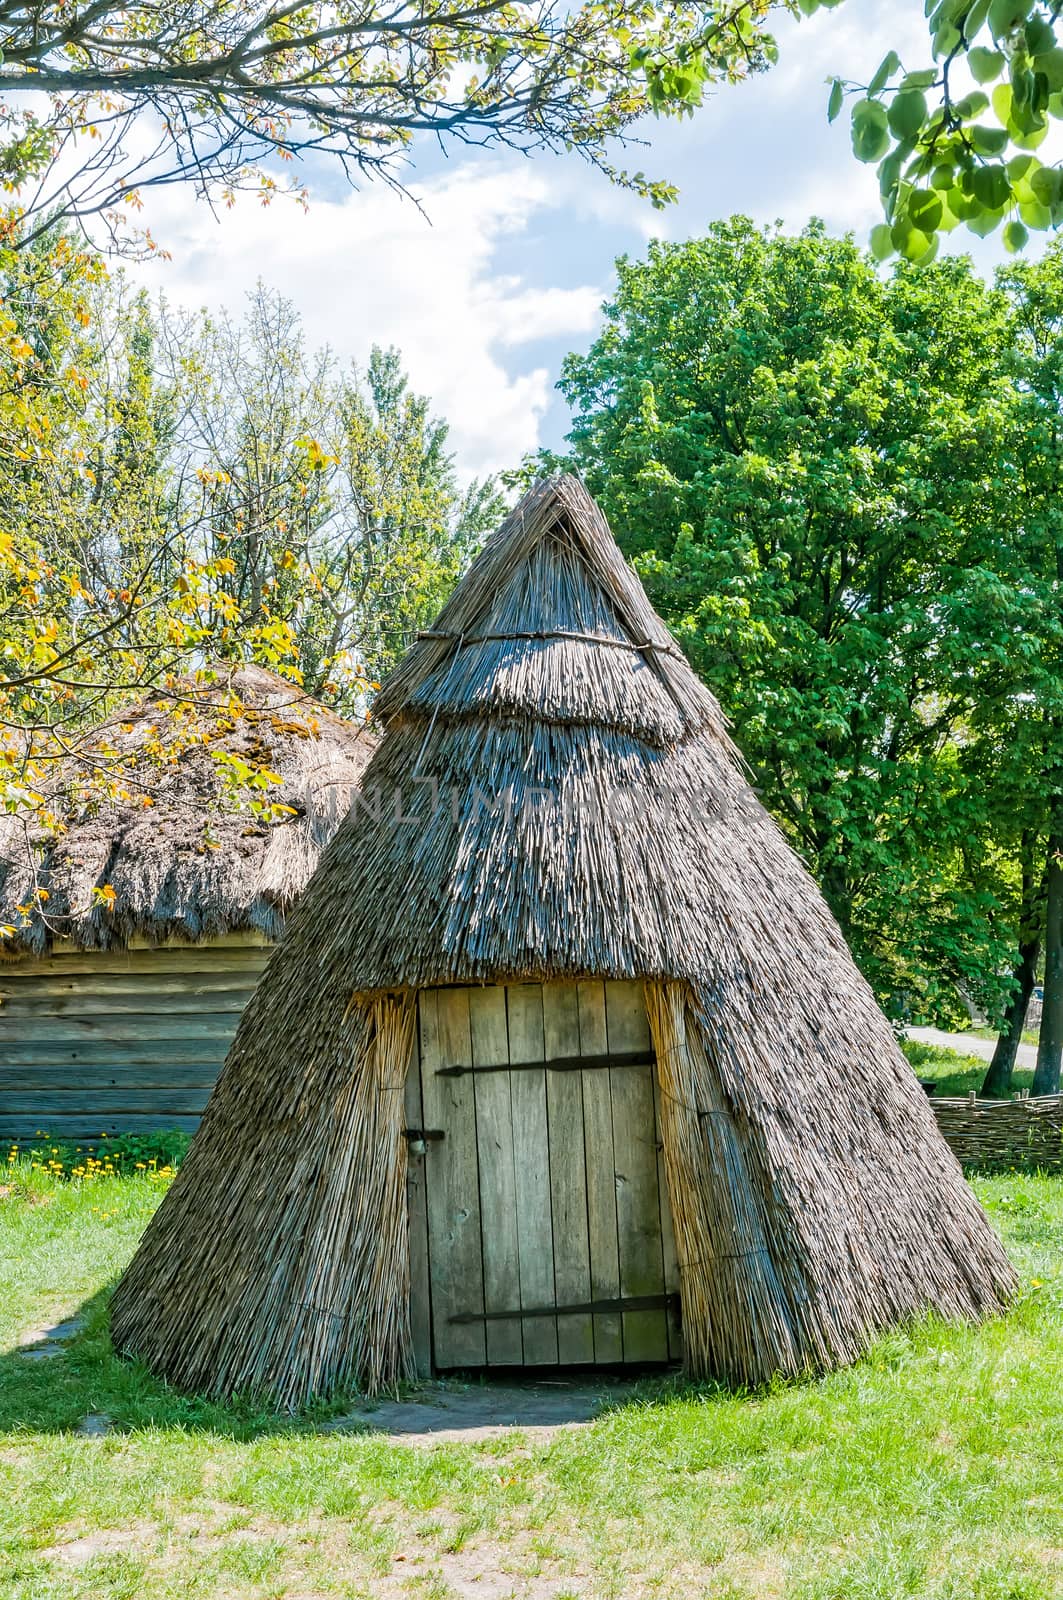 A typical ukrainian antique hut by MaxalTamor